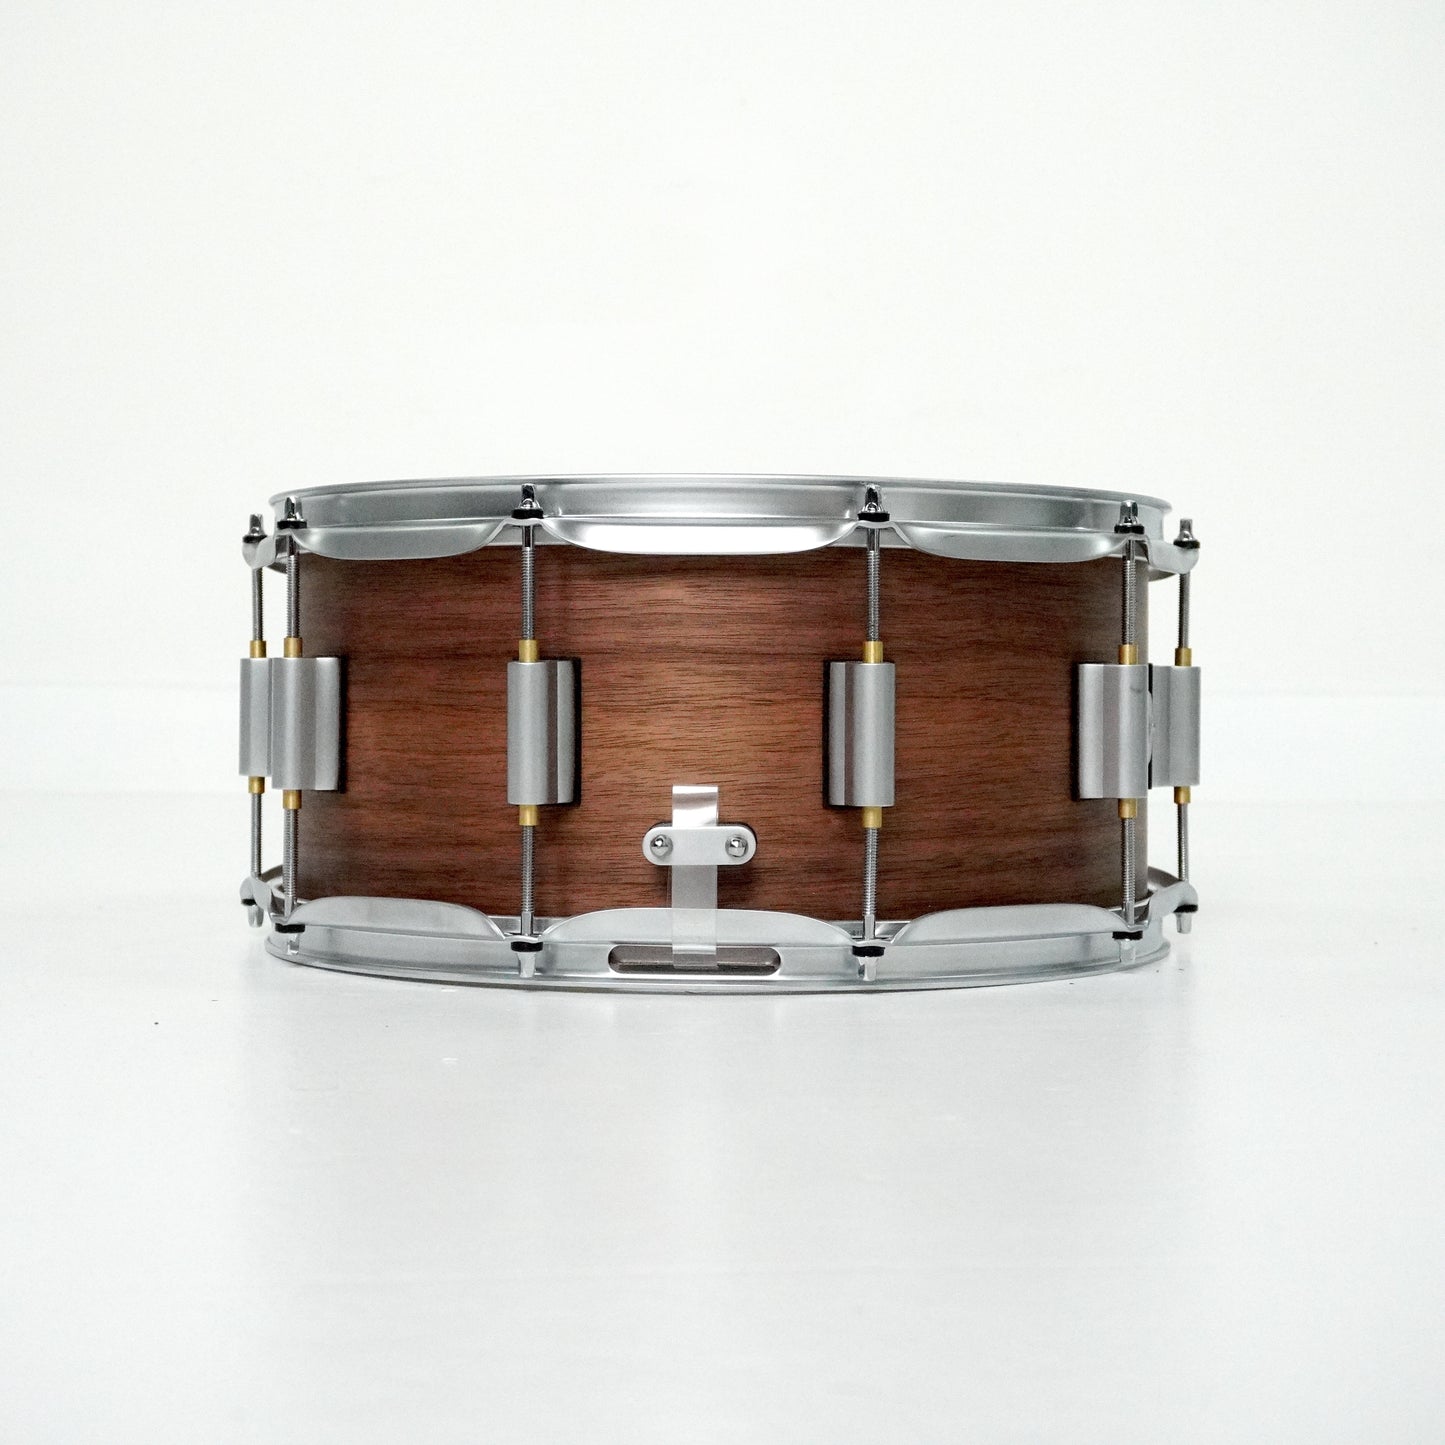 DrumCraft Series 6 14” x 6.5” Snare Drum